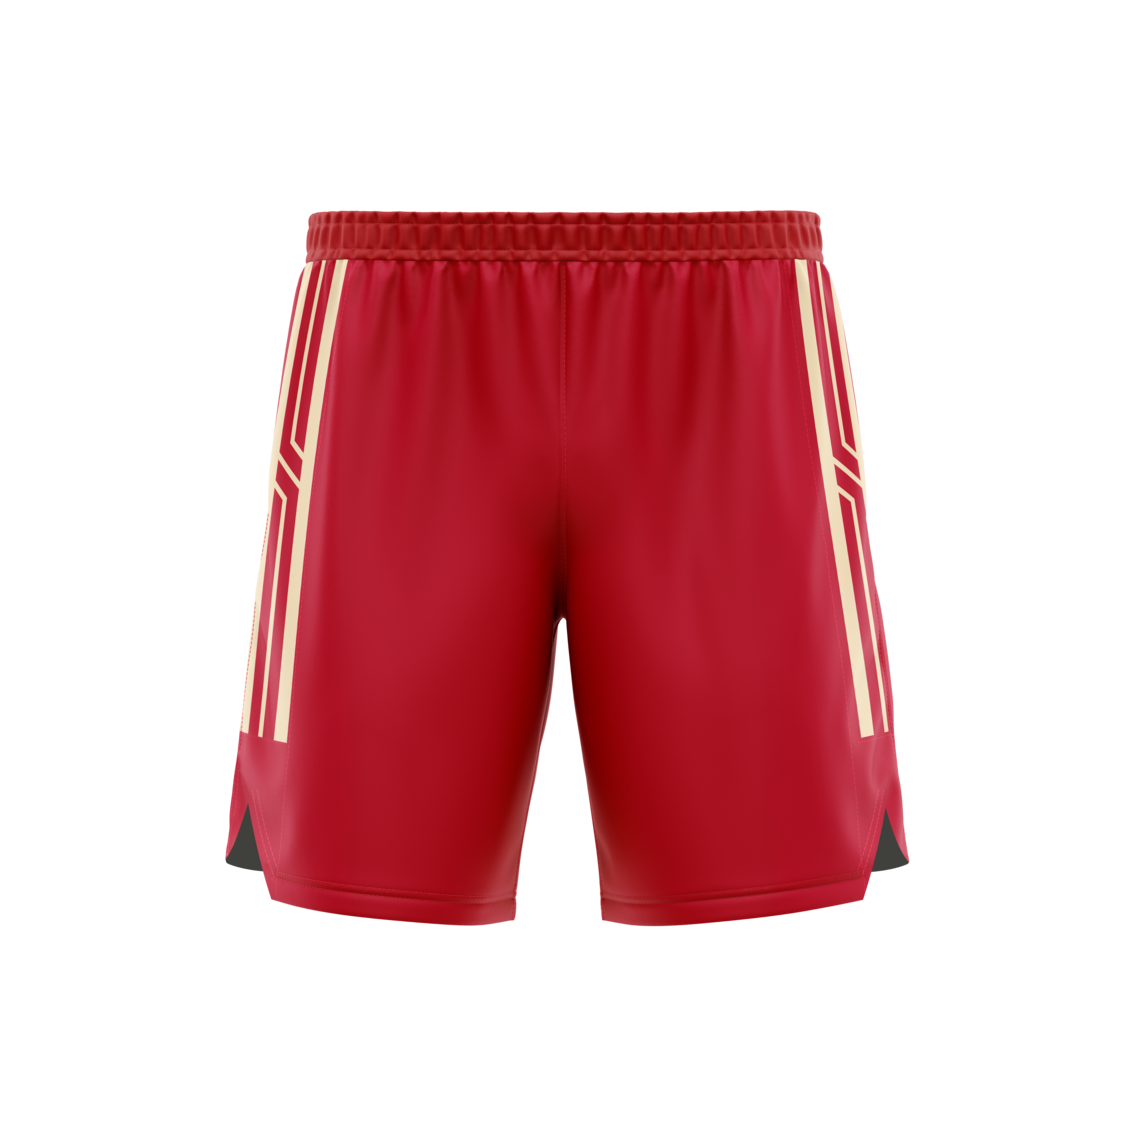 Persija Short Pants - Player Issue Home Player Fervor Knit - Merah